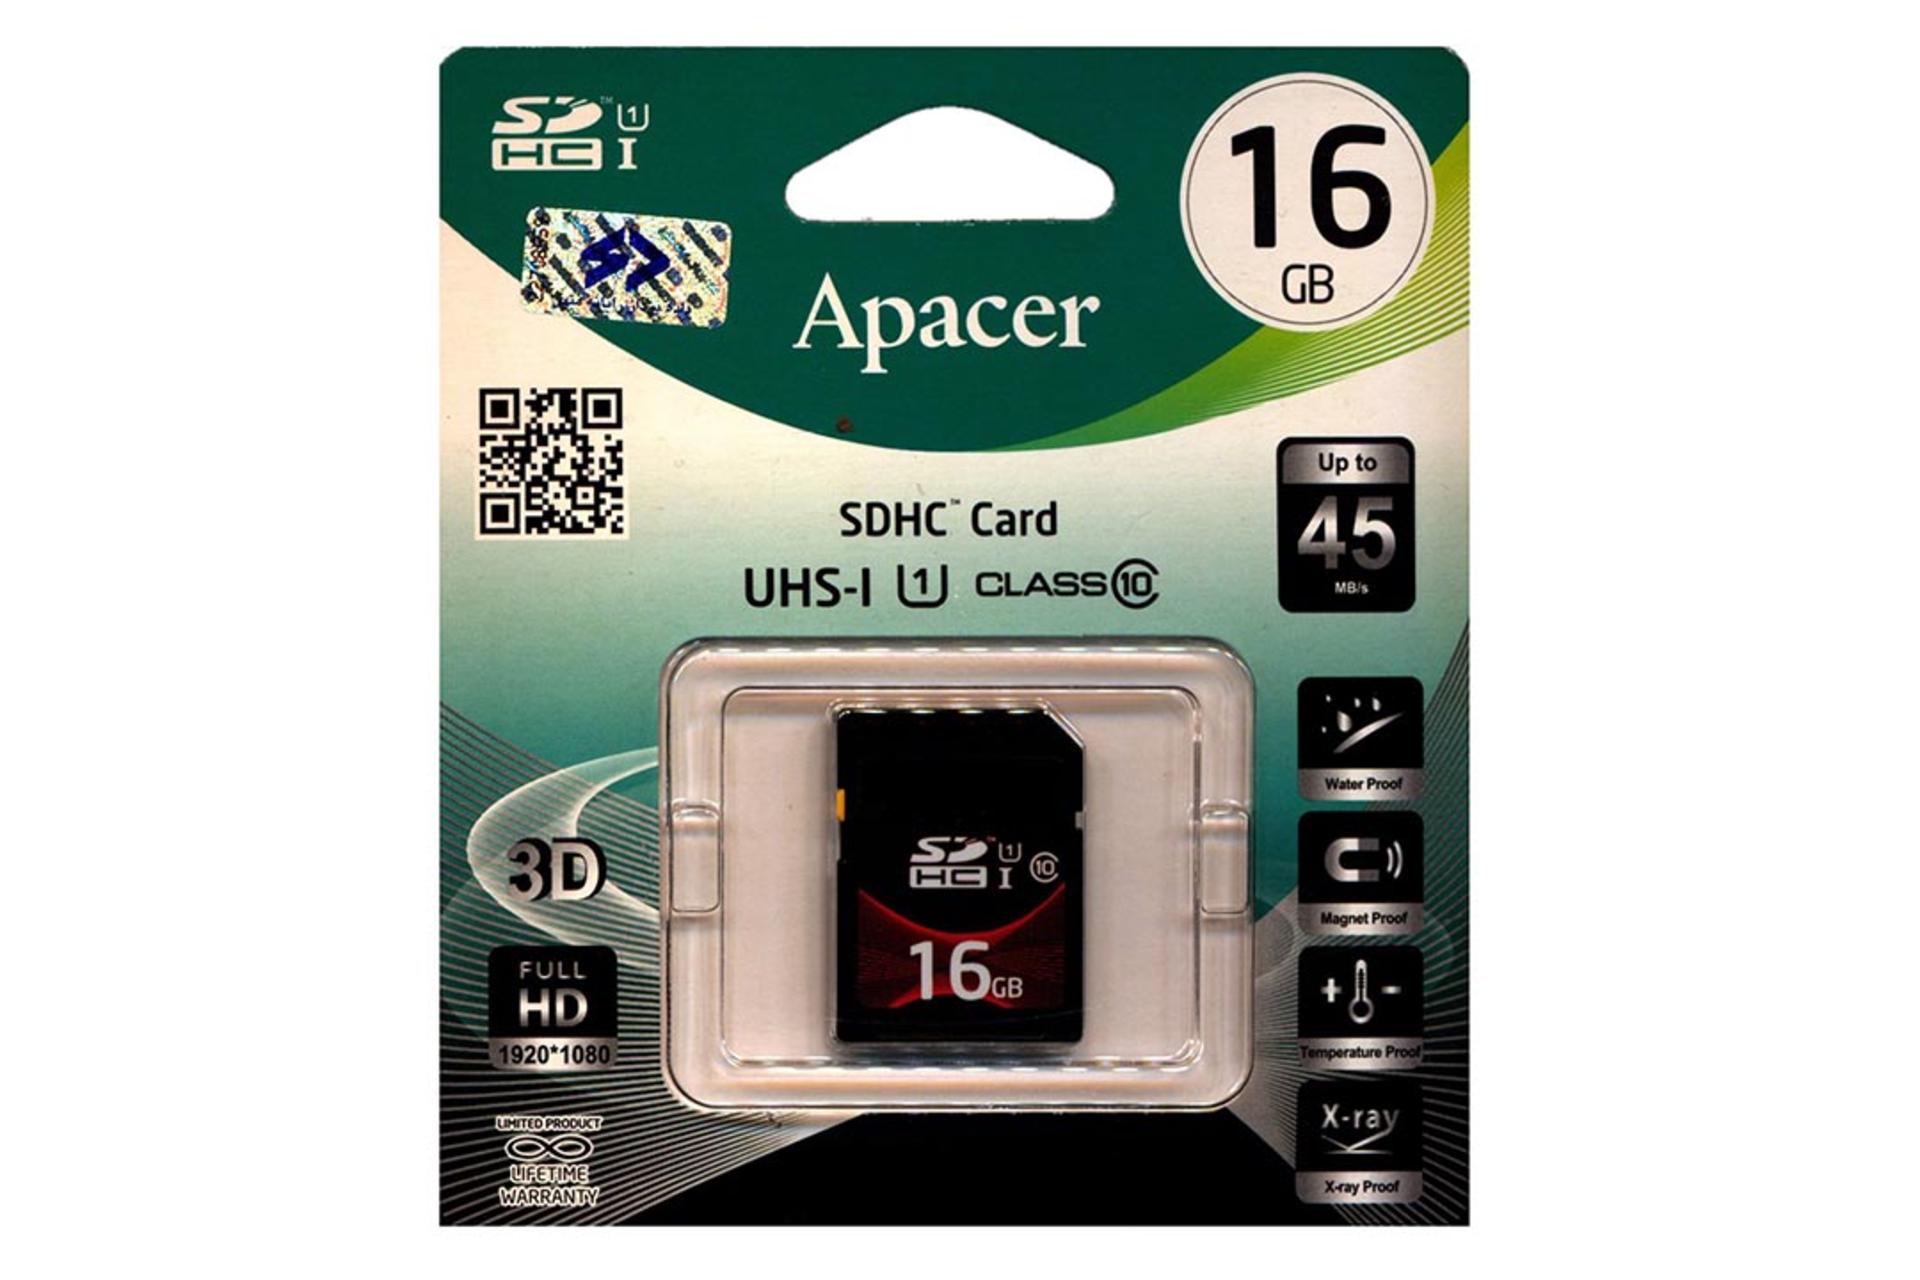 Apacer SDHC Class 10 UHS-I U1 16GB